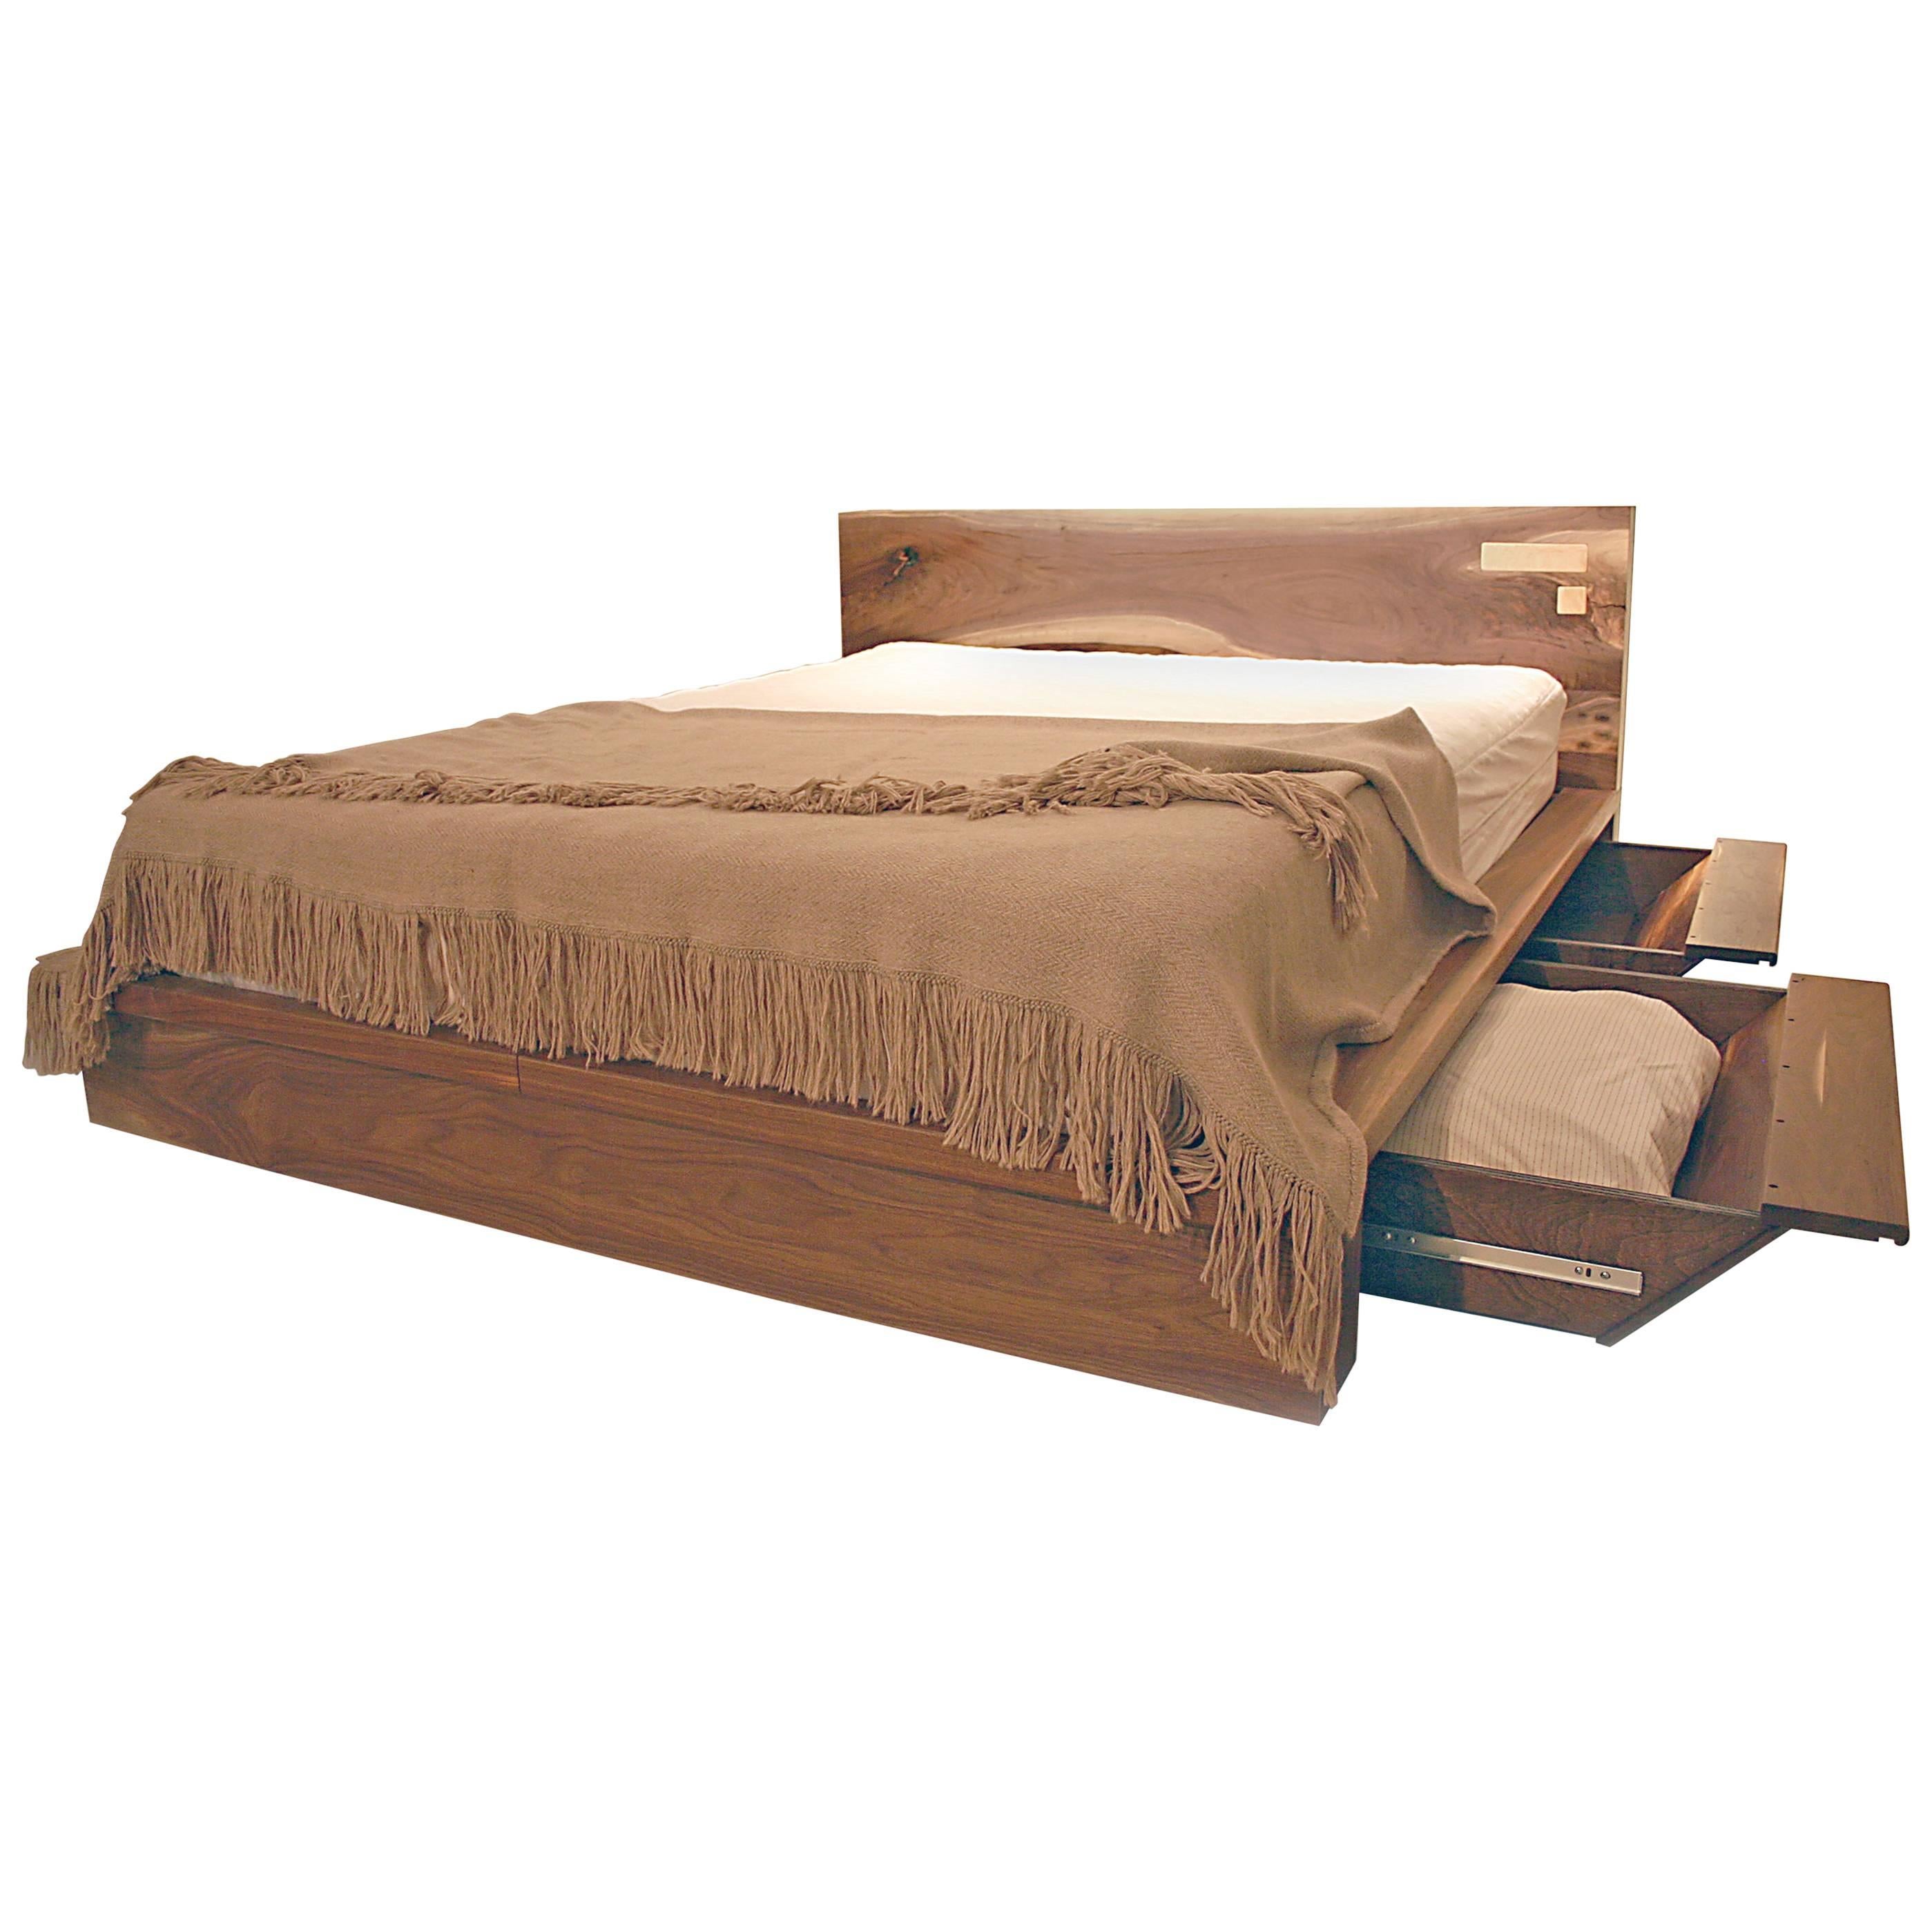 Shimna Liffey Platform Bed with Hidden Storage Drawers, Queen-Size For Sale